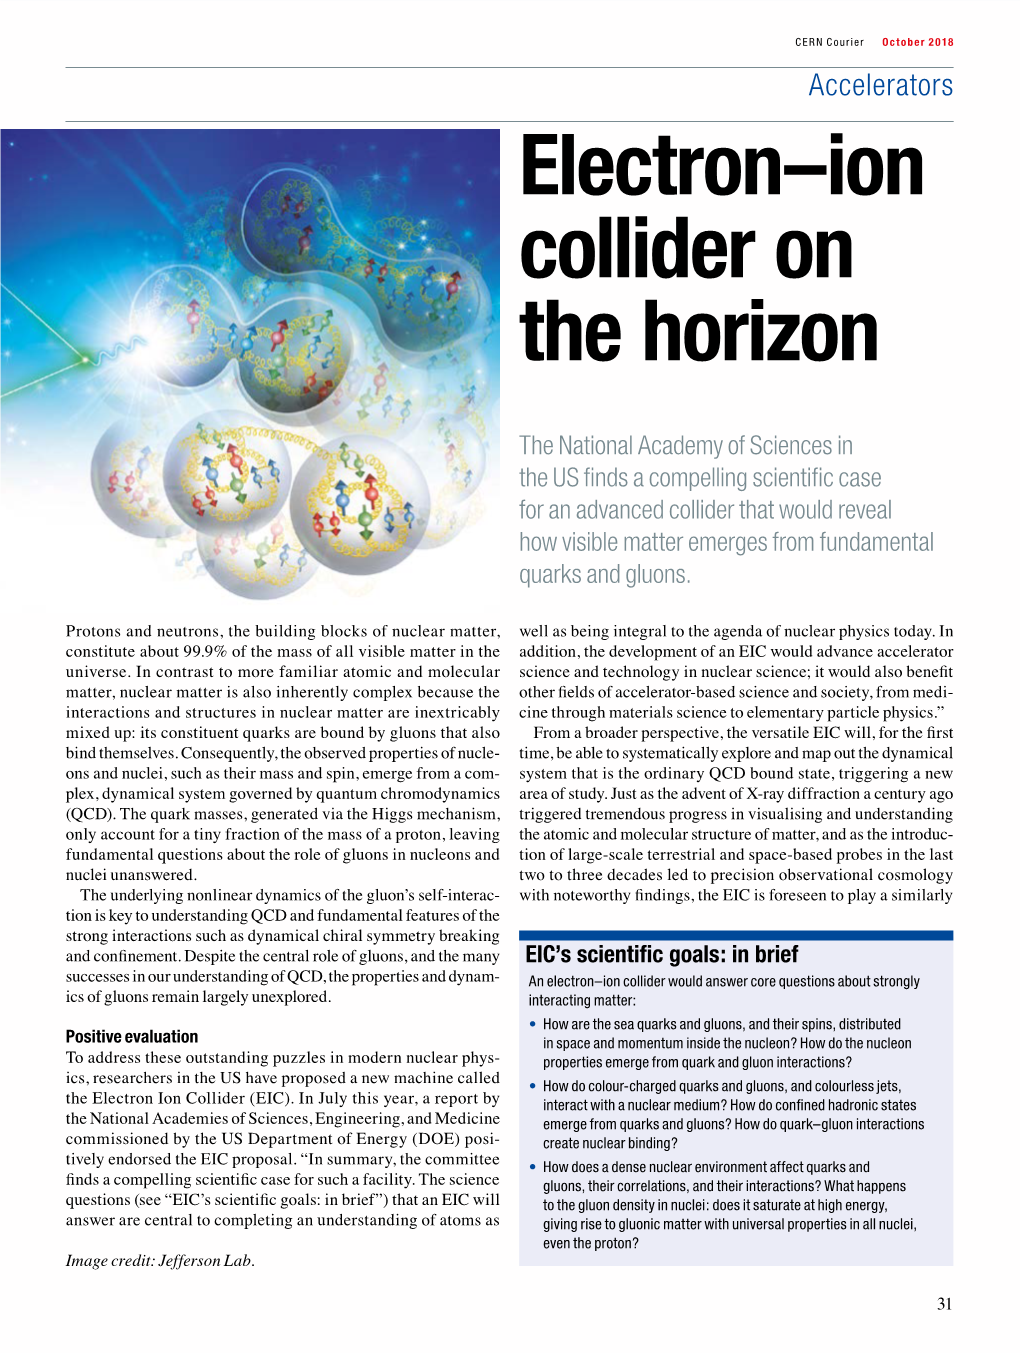 Electron–Ion Collider on the Horizon